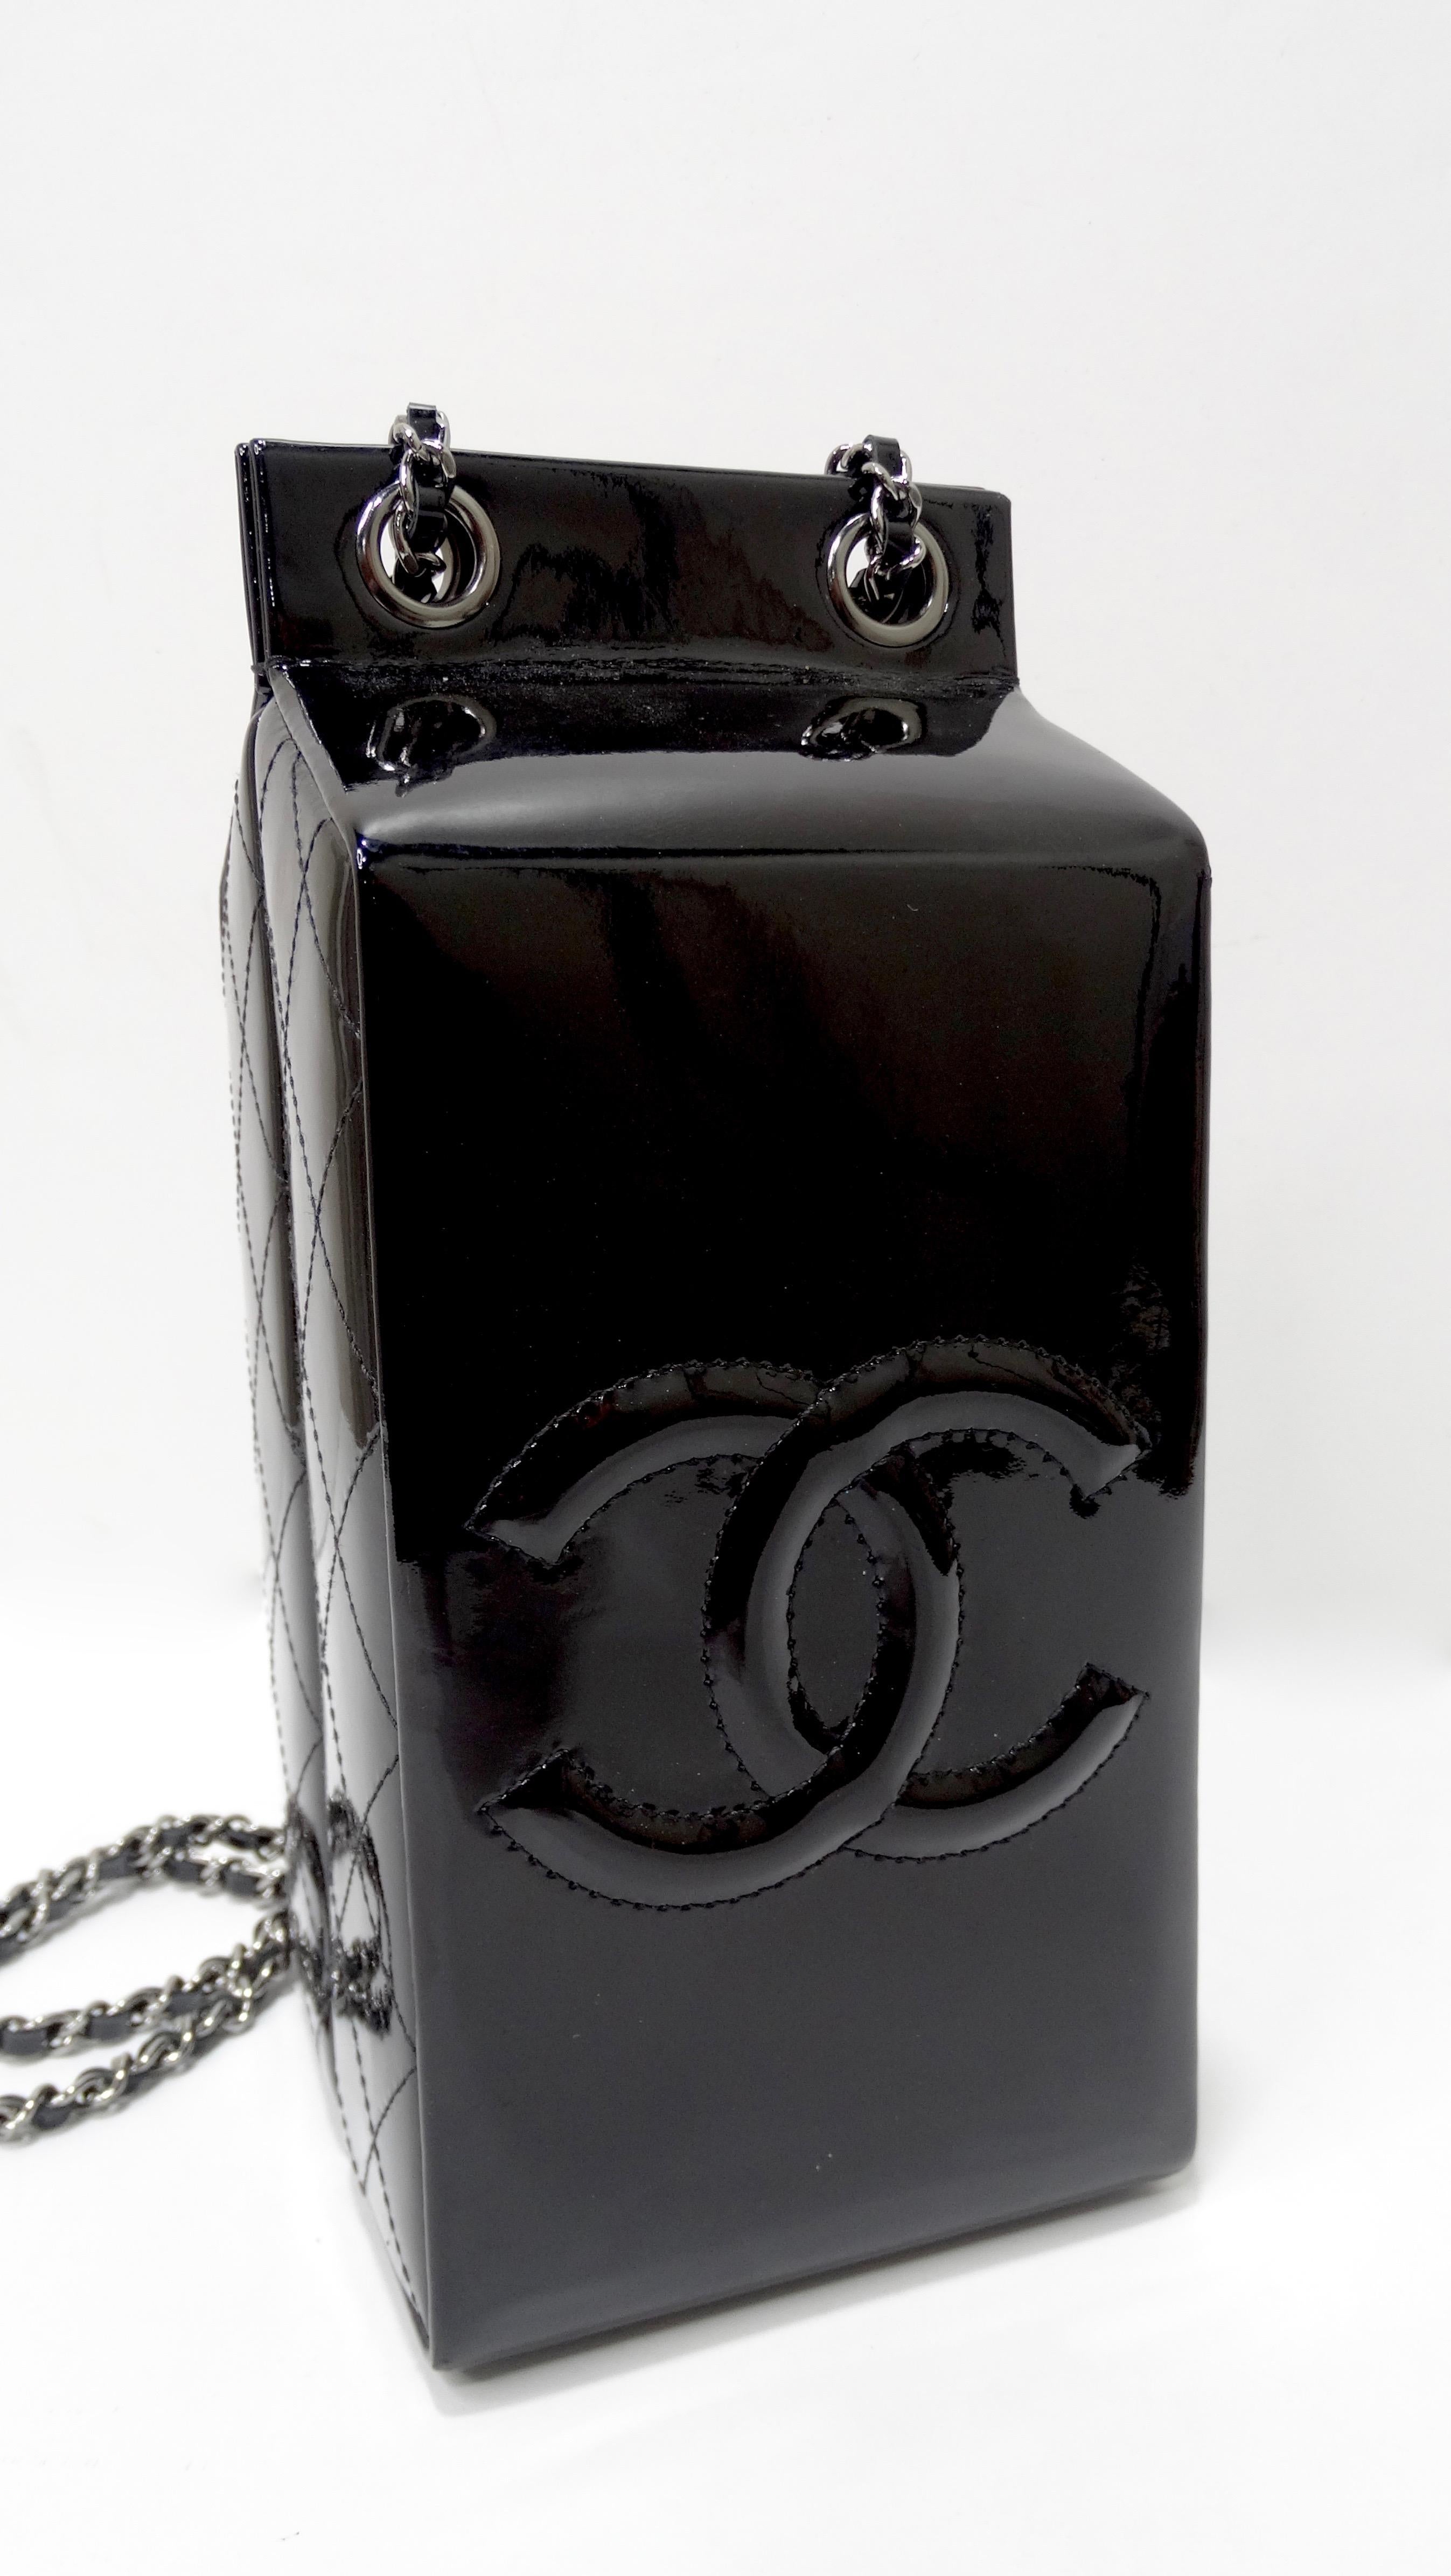 Chanel 2015 Black Patent Leather Milk Carton Bag 4